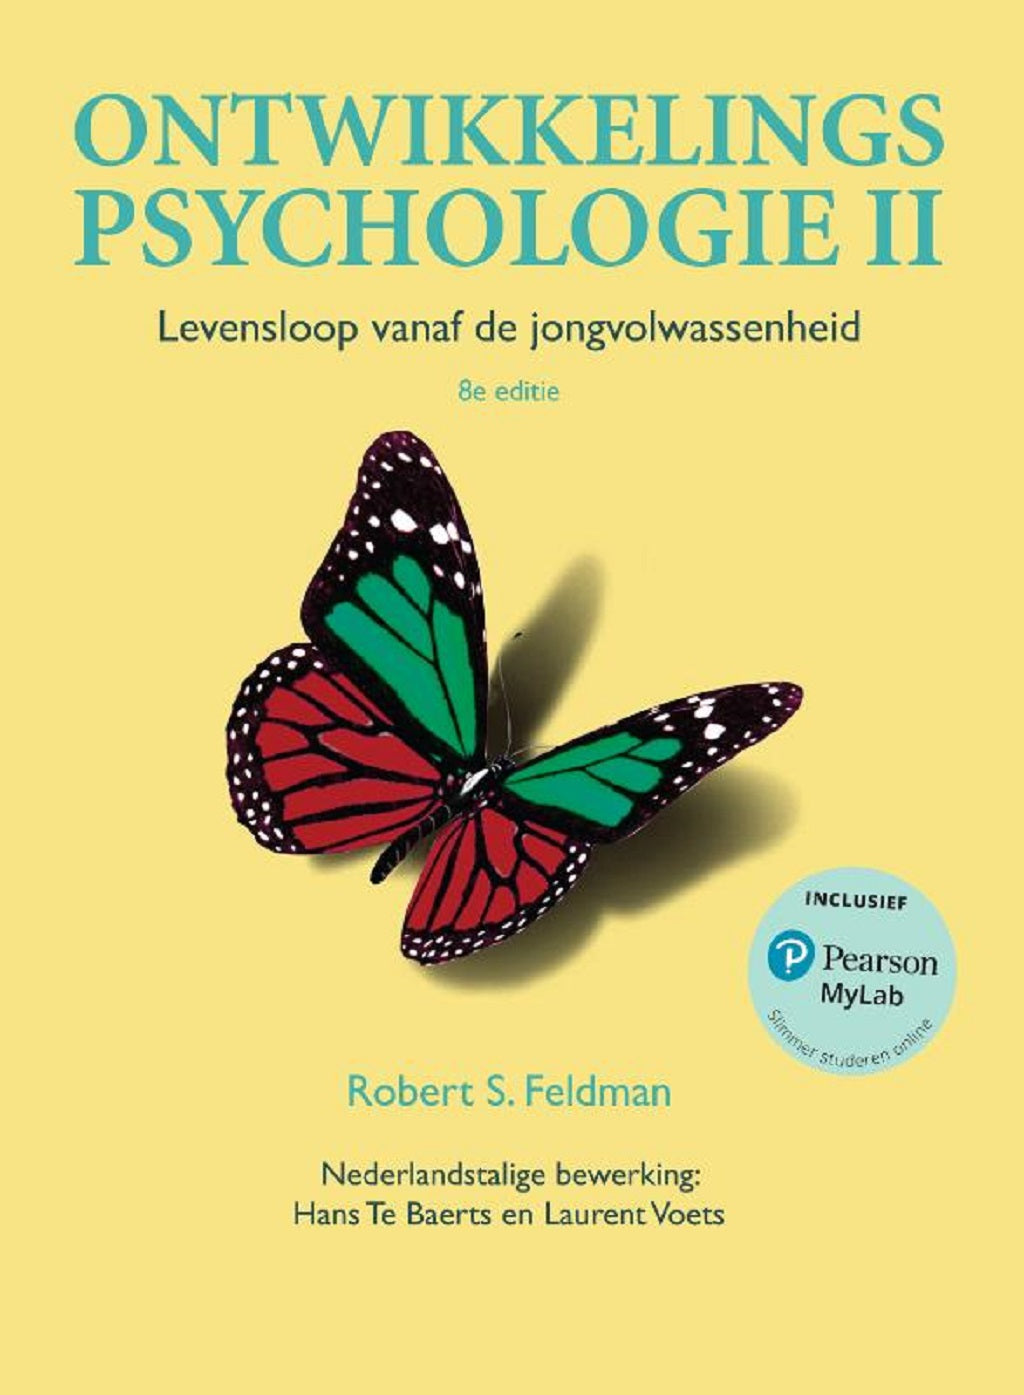 Ontwikkelingspsychologie II, 8e editie (Print boek + MyLab toegangscode)